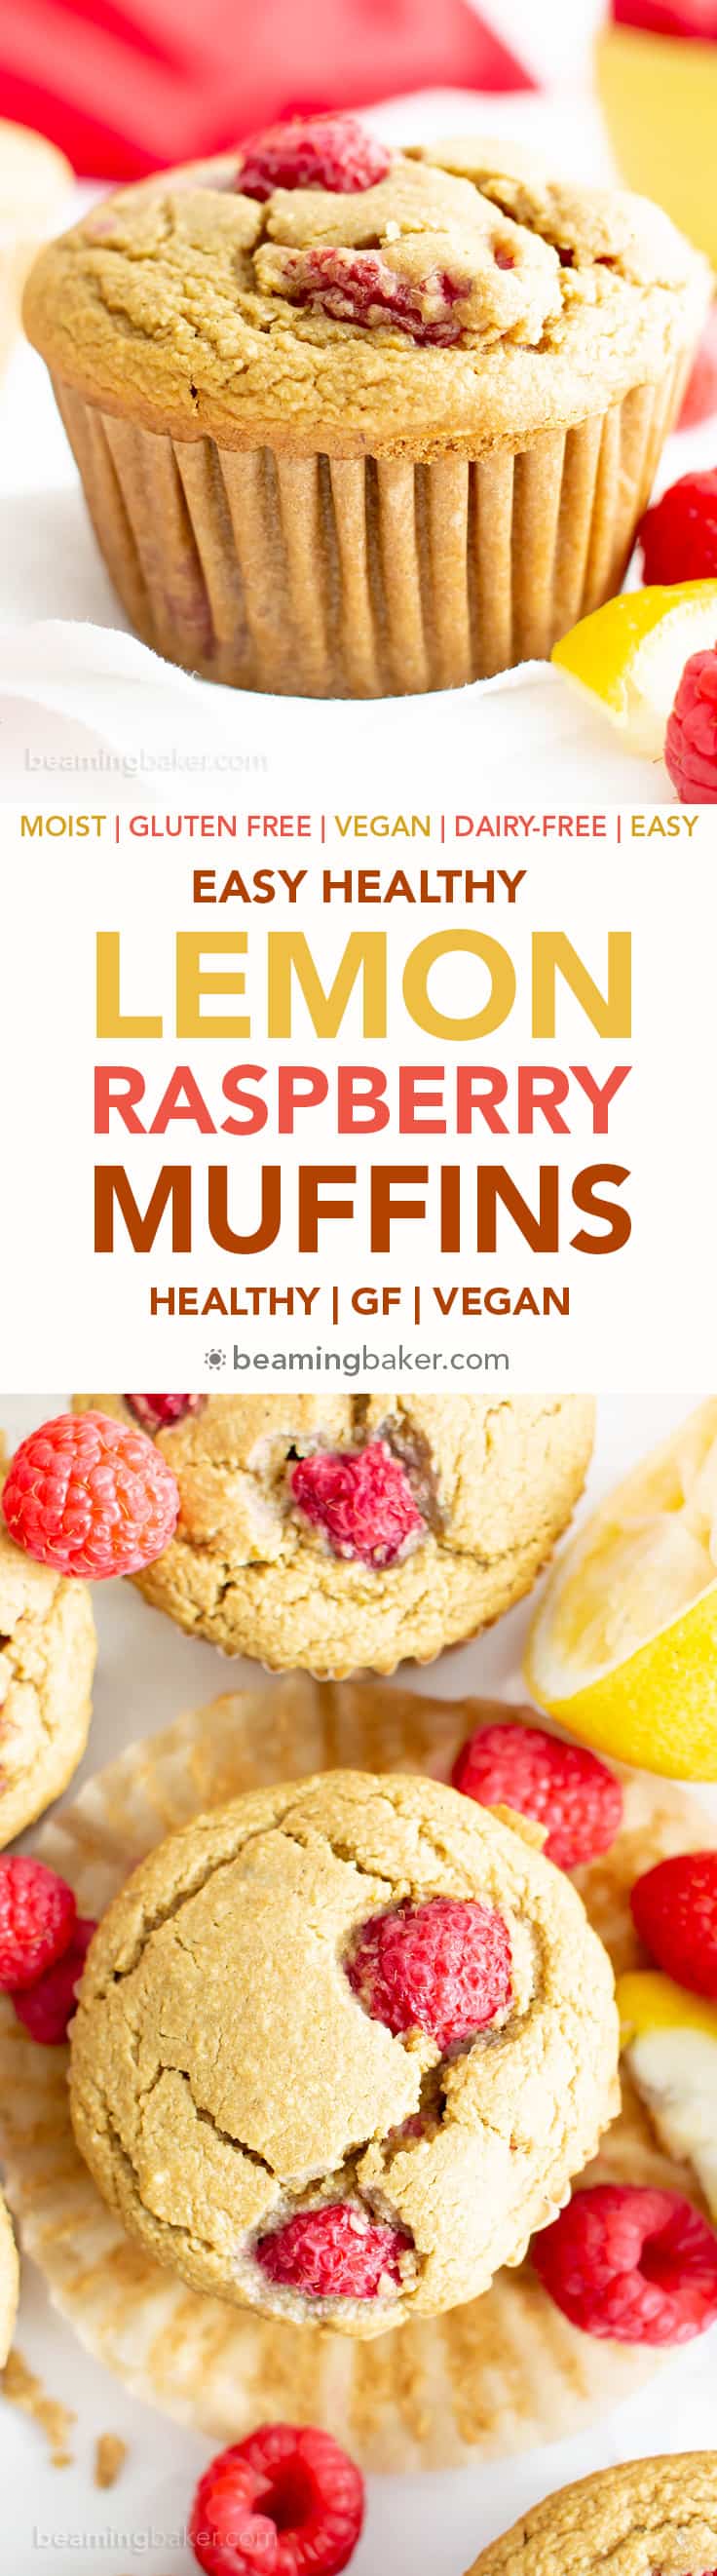 Healthy Lemon Raspberry Muffins Recipe (GF, V): this moist ‘n easy lemon raspberry muffins recipe is gluten free & vegan! A healthy lemon raspberry muffins recipe that’s bursting with raspberry flavor! #GlutenFree #Muffins #Healthy #Vegan #Lemon #Raspberry | Recipe at BeamingBaker.com